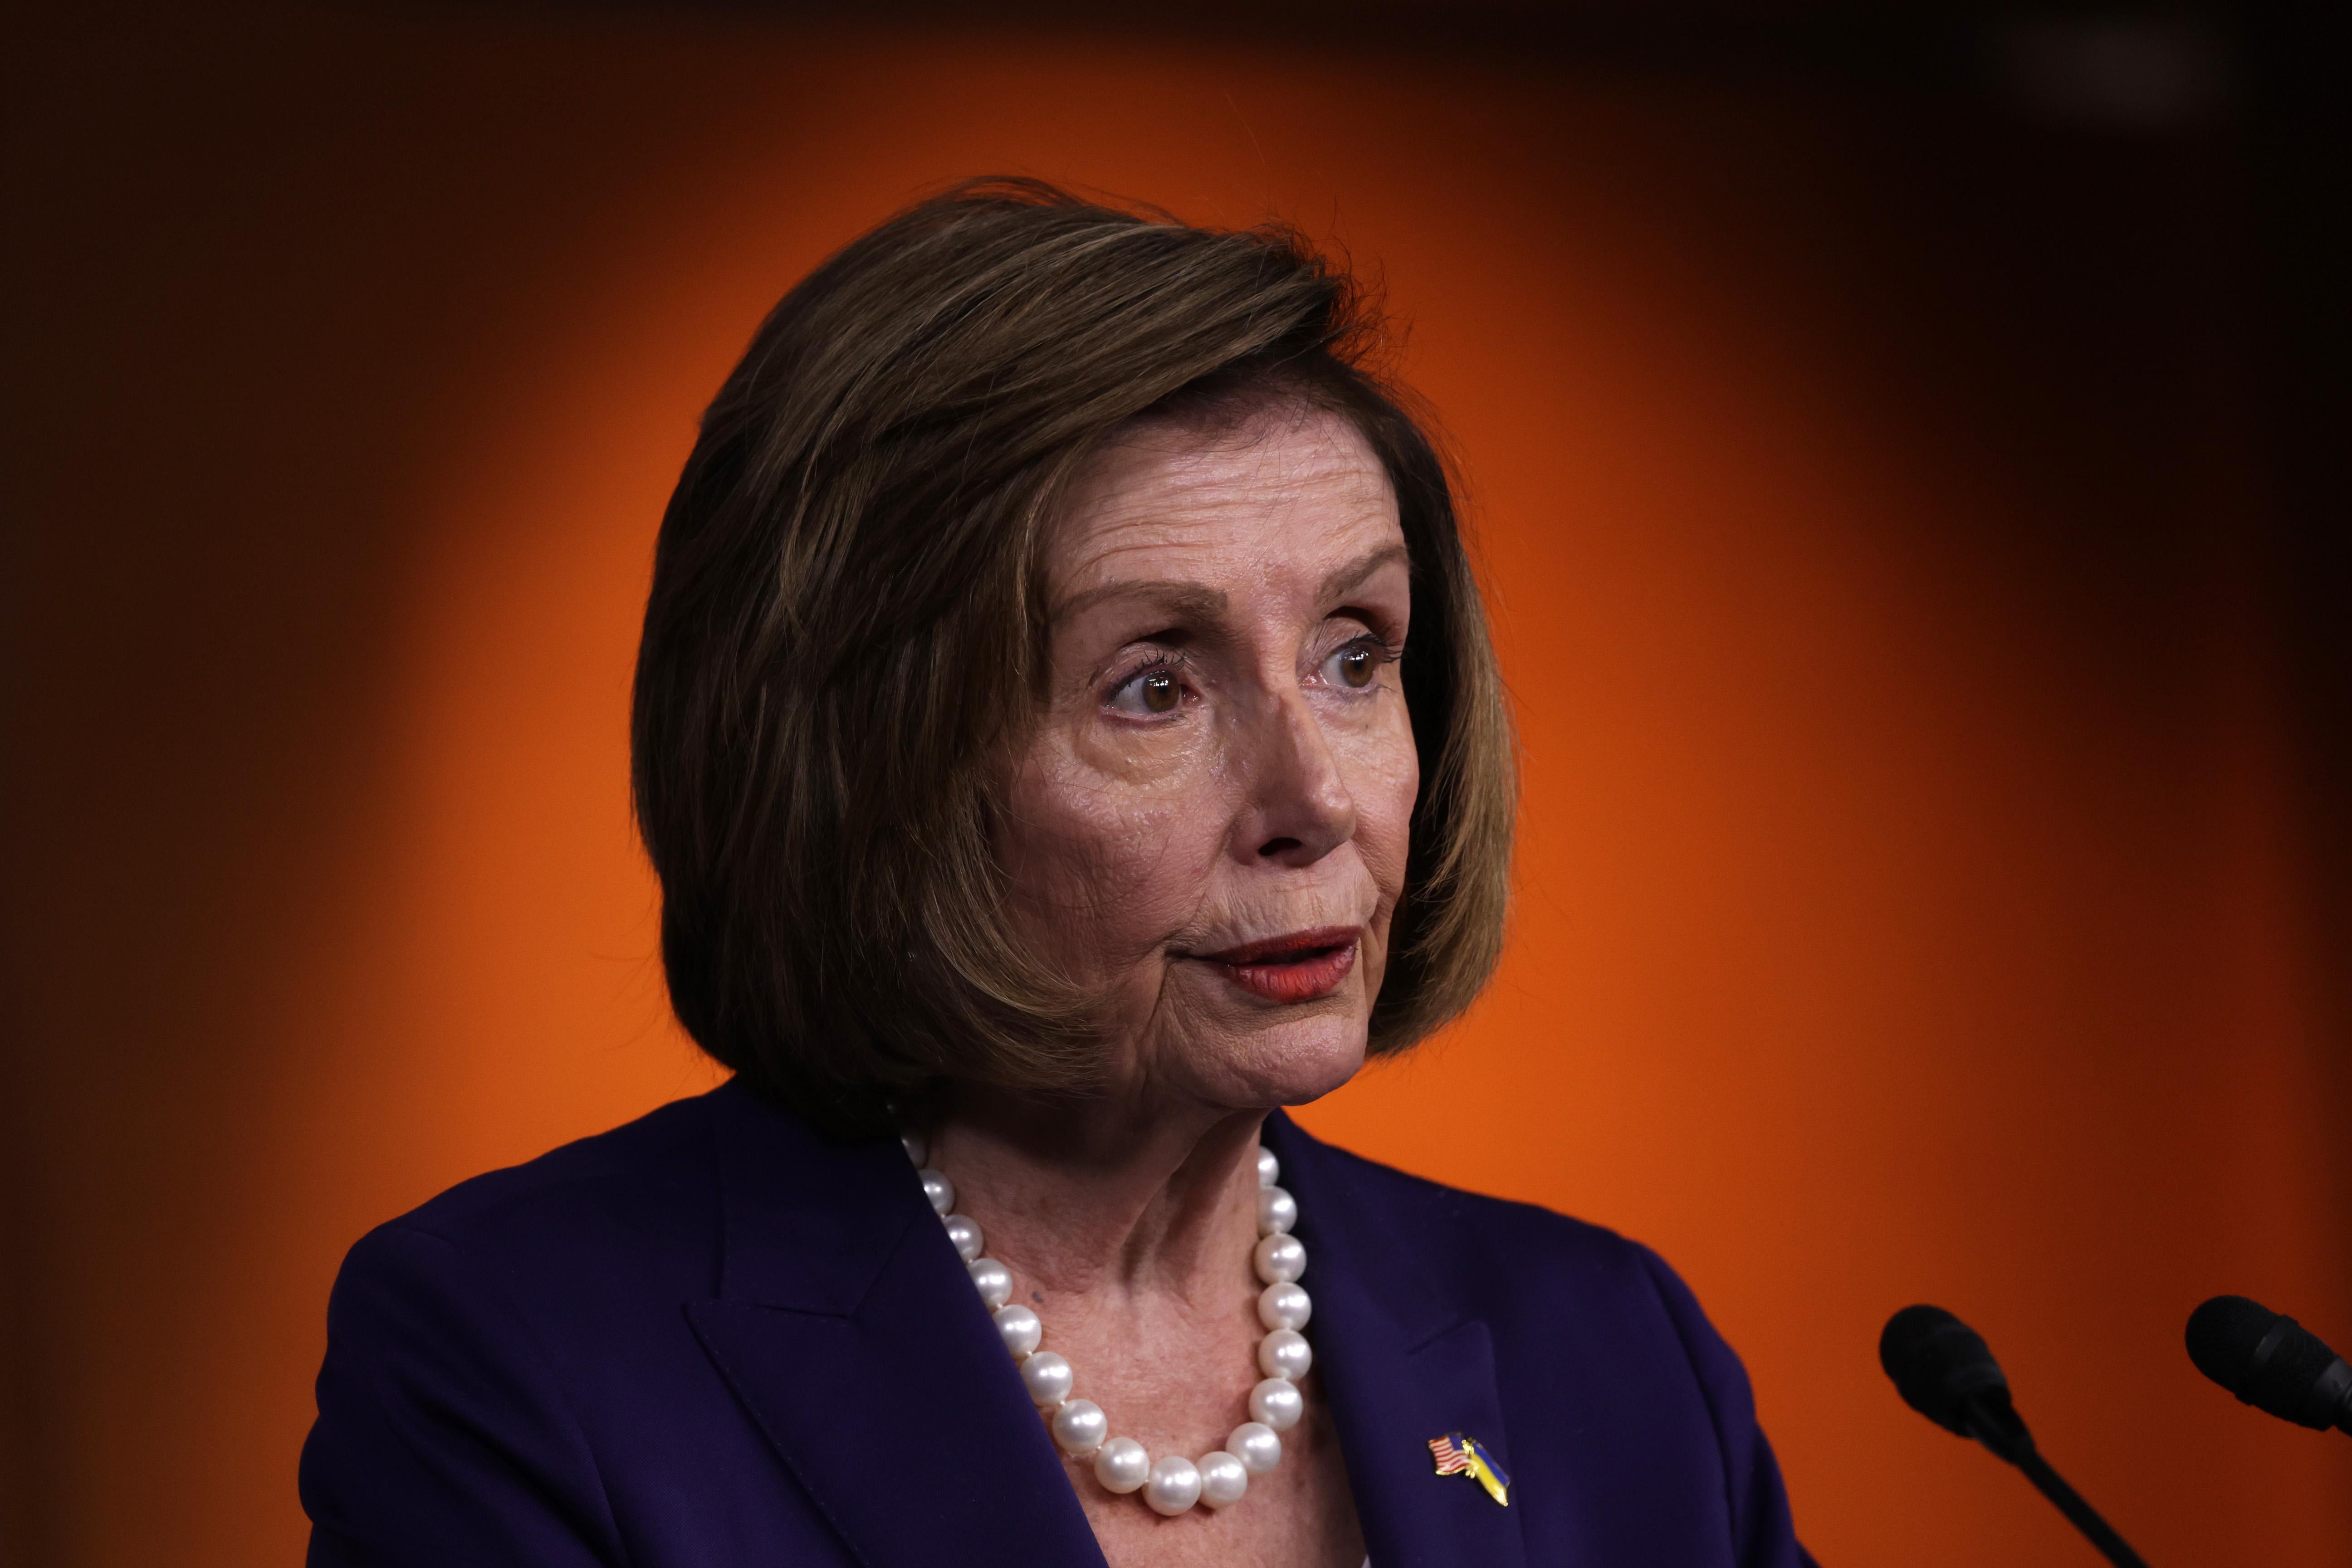 Nancy Pelosi in a purple suit.